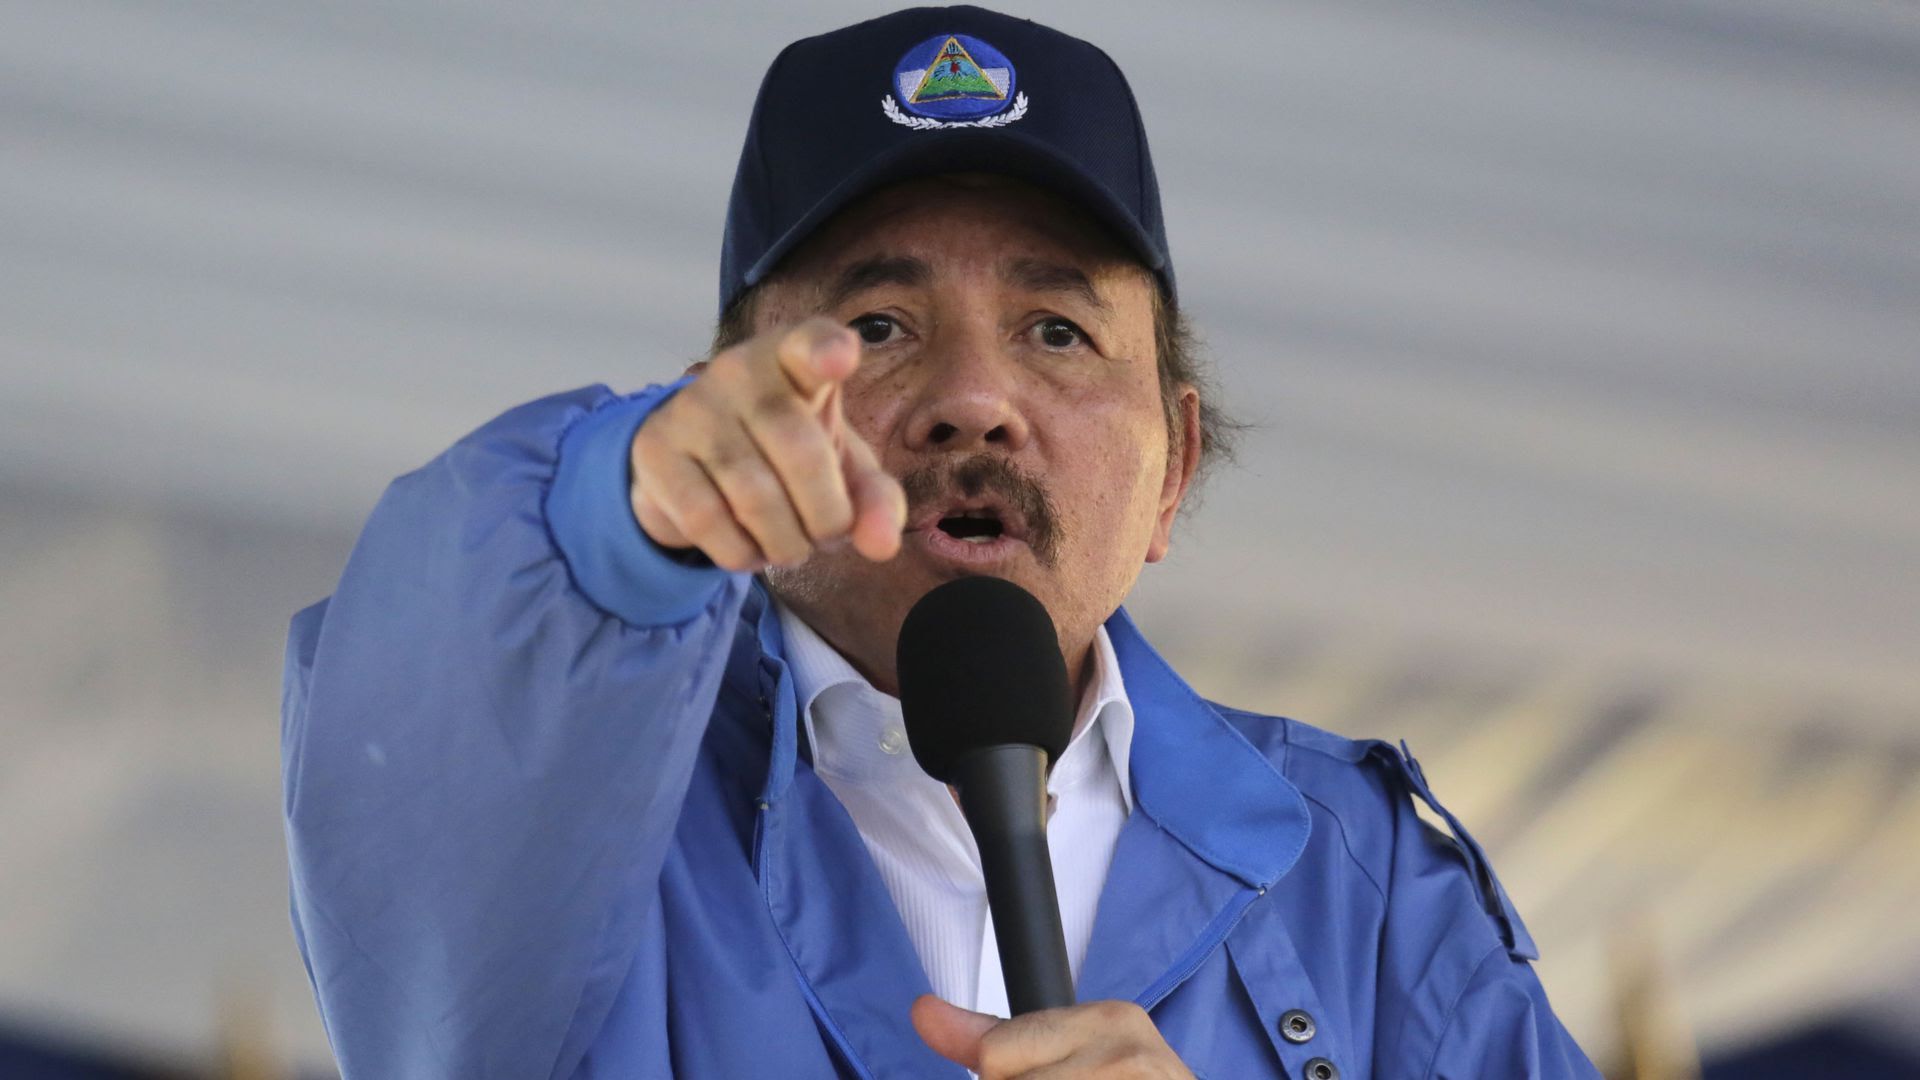 Nicaraguan President Daniel Ortega in 2018. Photo: Inti Ocon/AFP via Getty Images